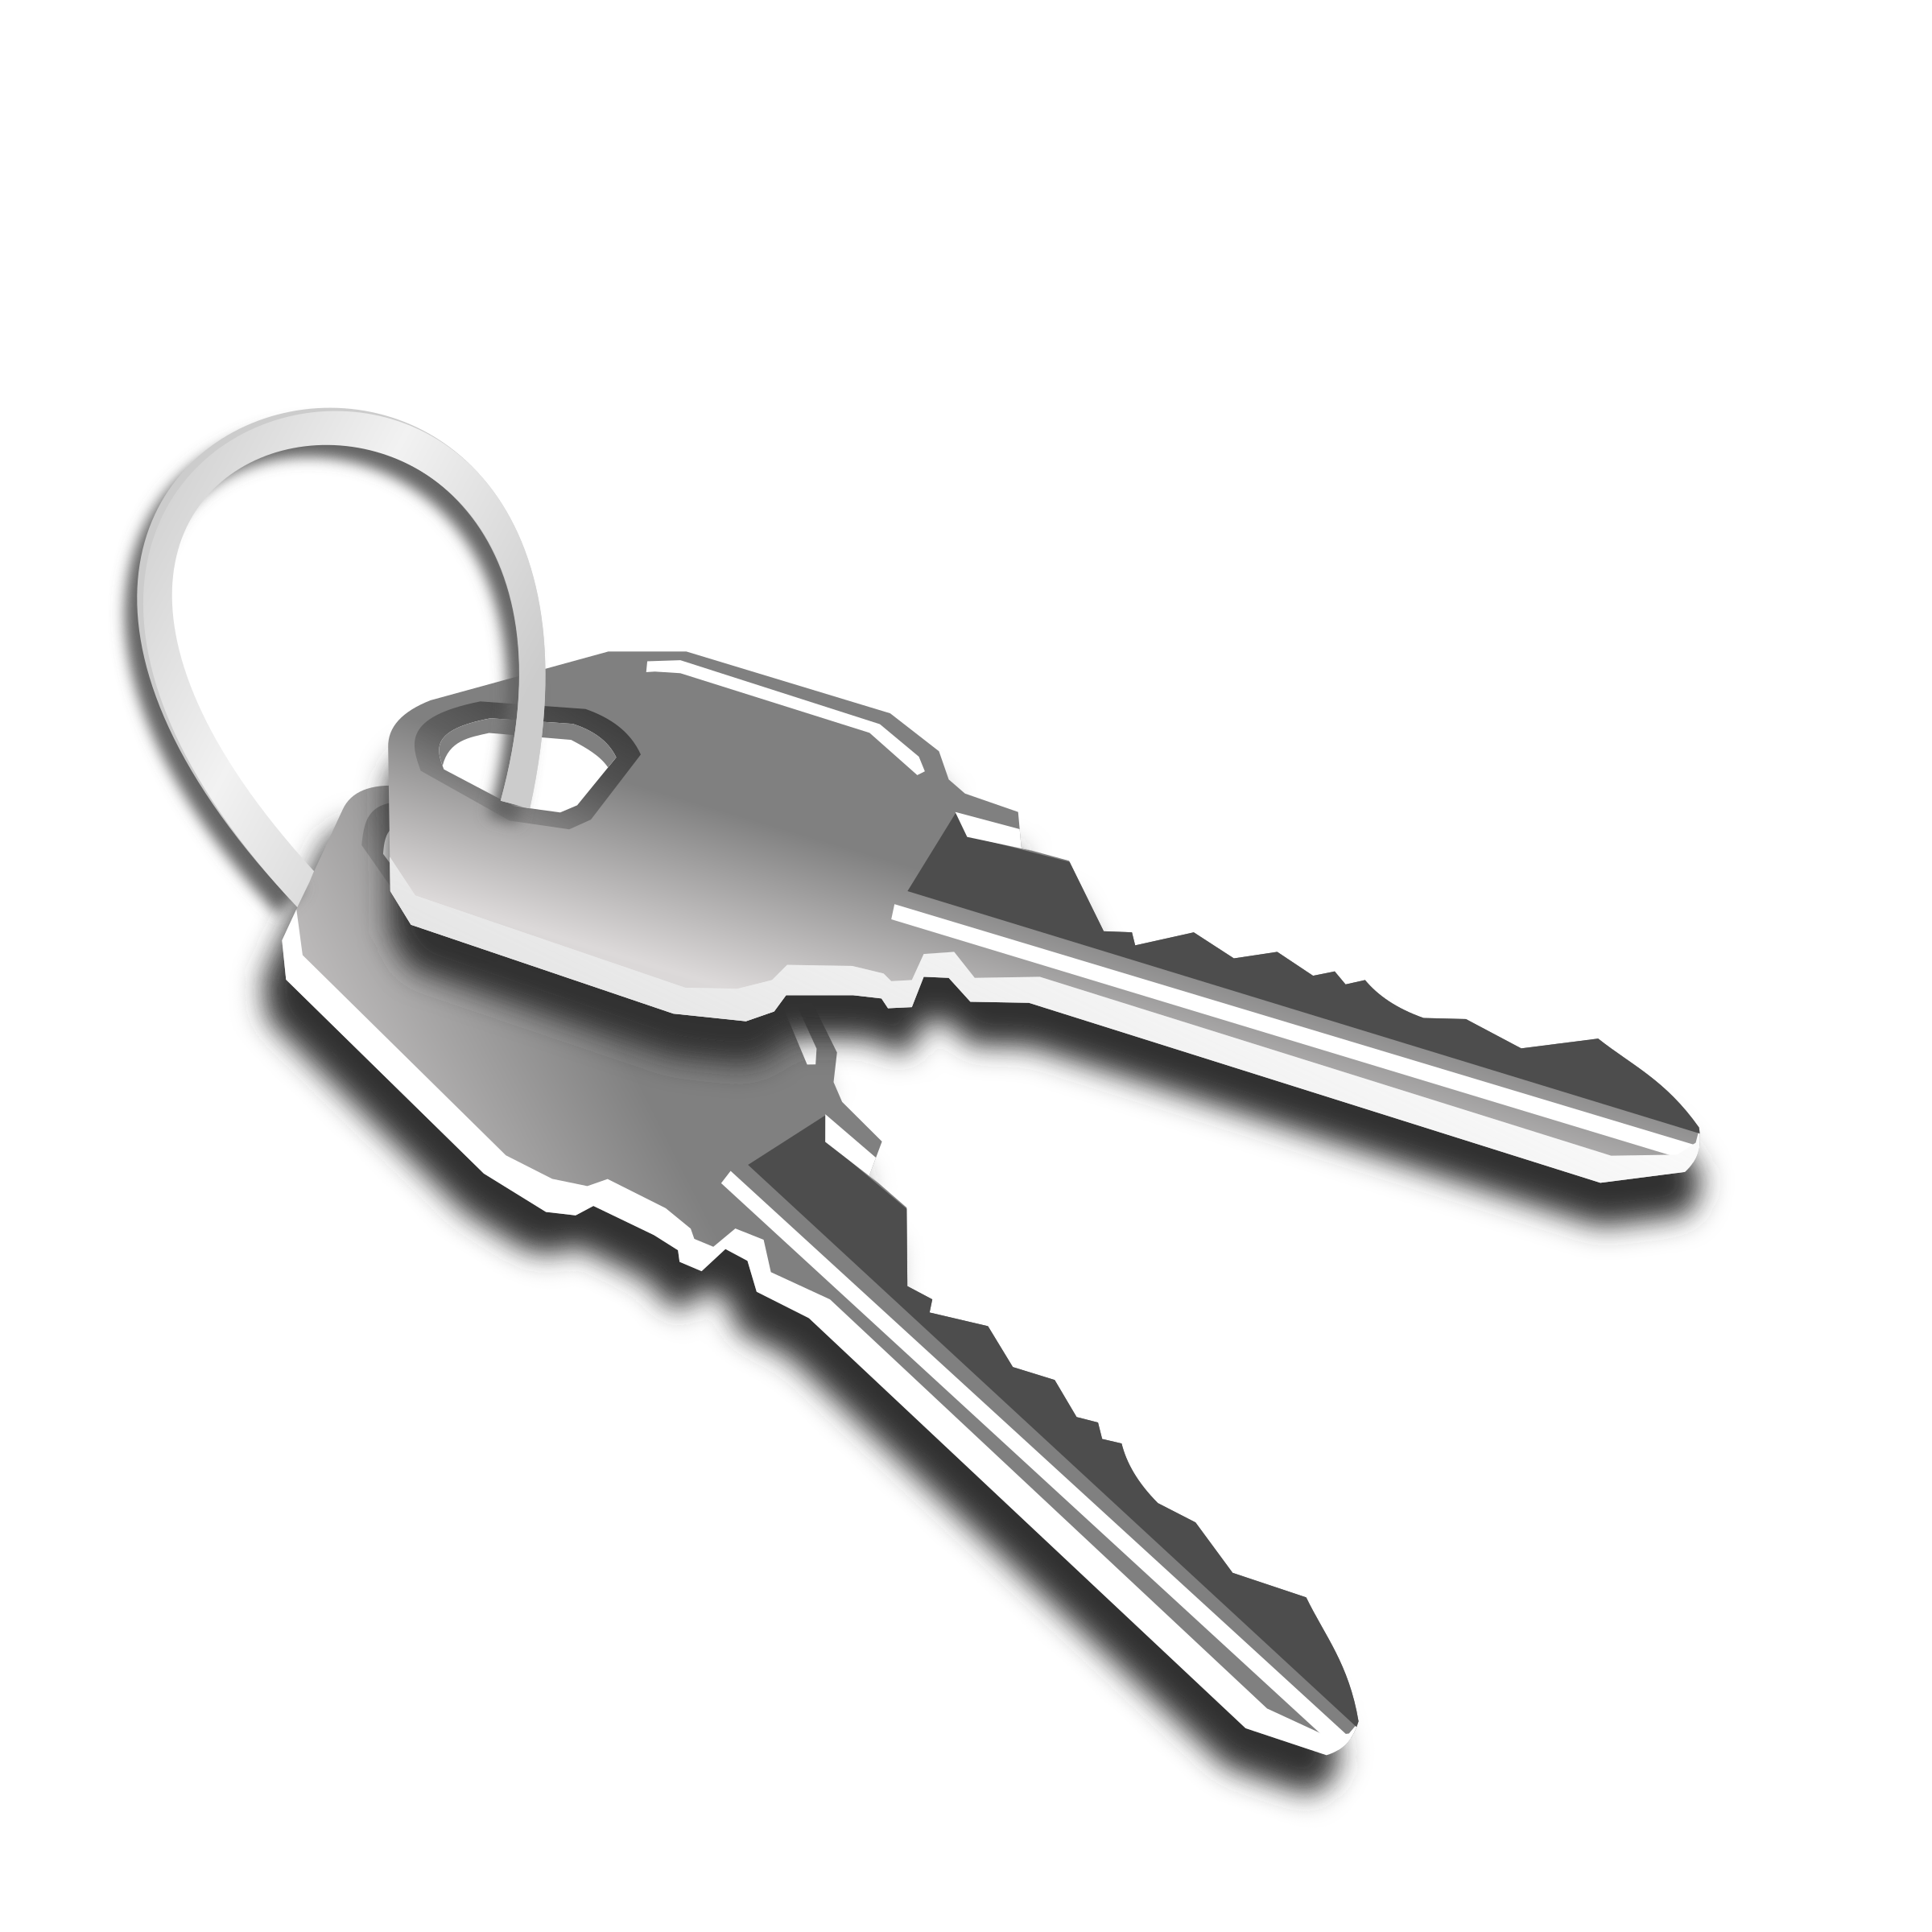 Download Keys HQ PNG Image | FreePNGImg